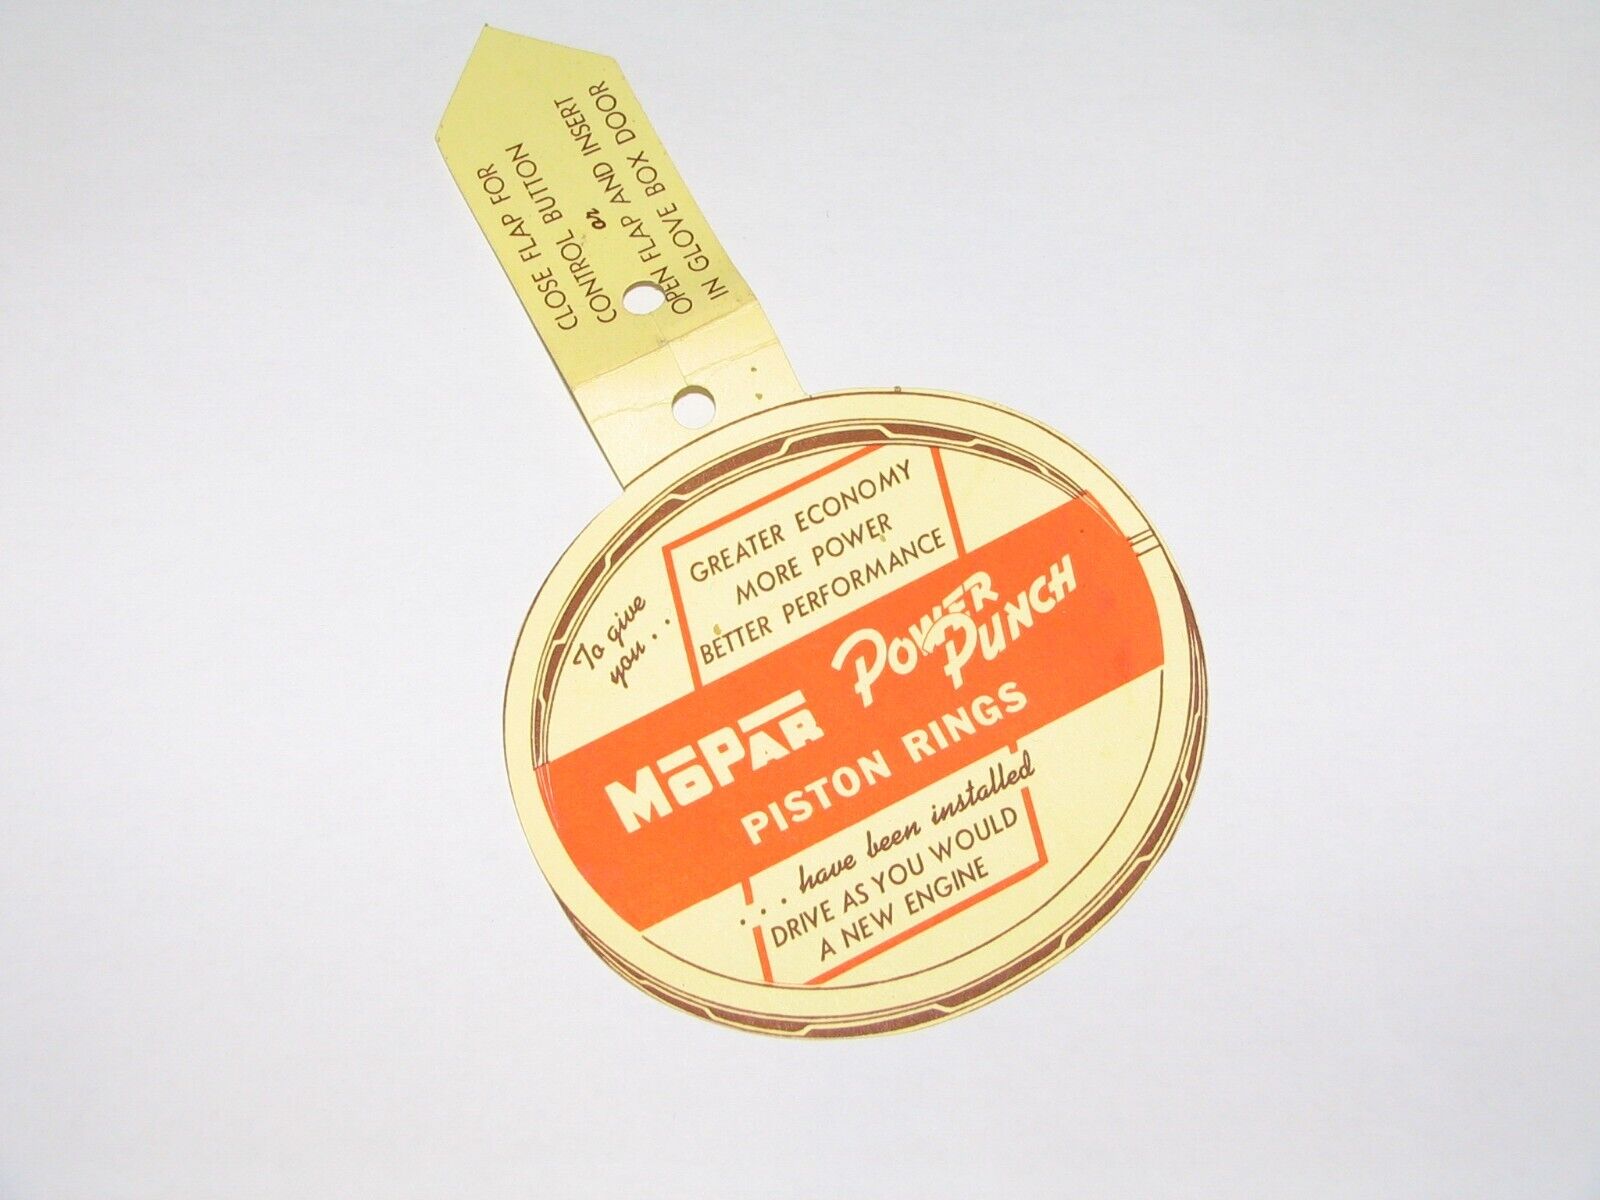 NOS Original 1930s-1950s MOPAR Power Punch Piston Rings Dash or Glove Box Tag